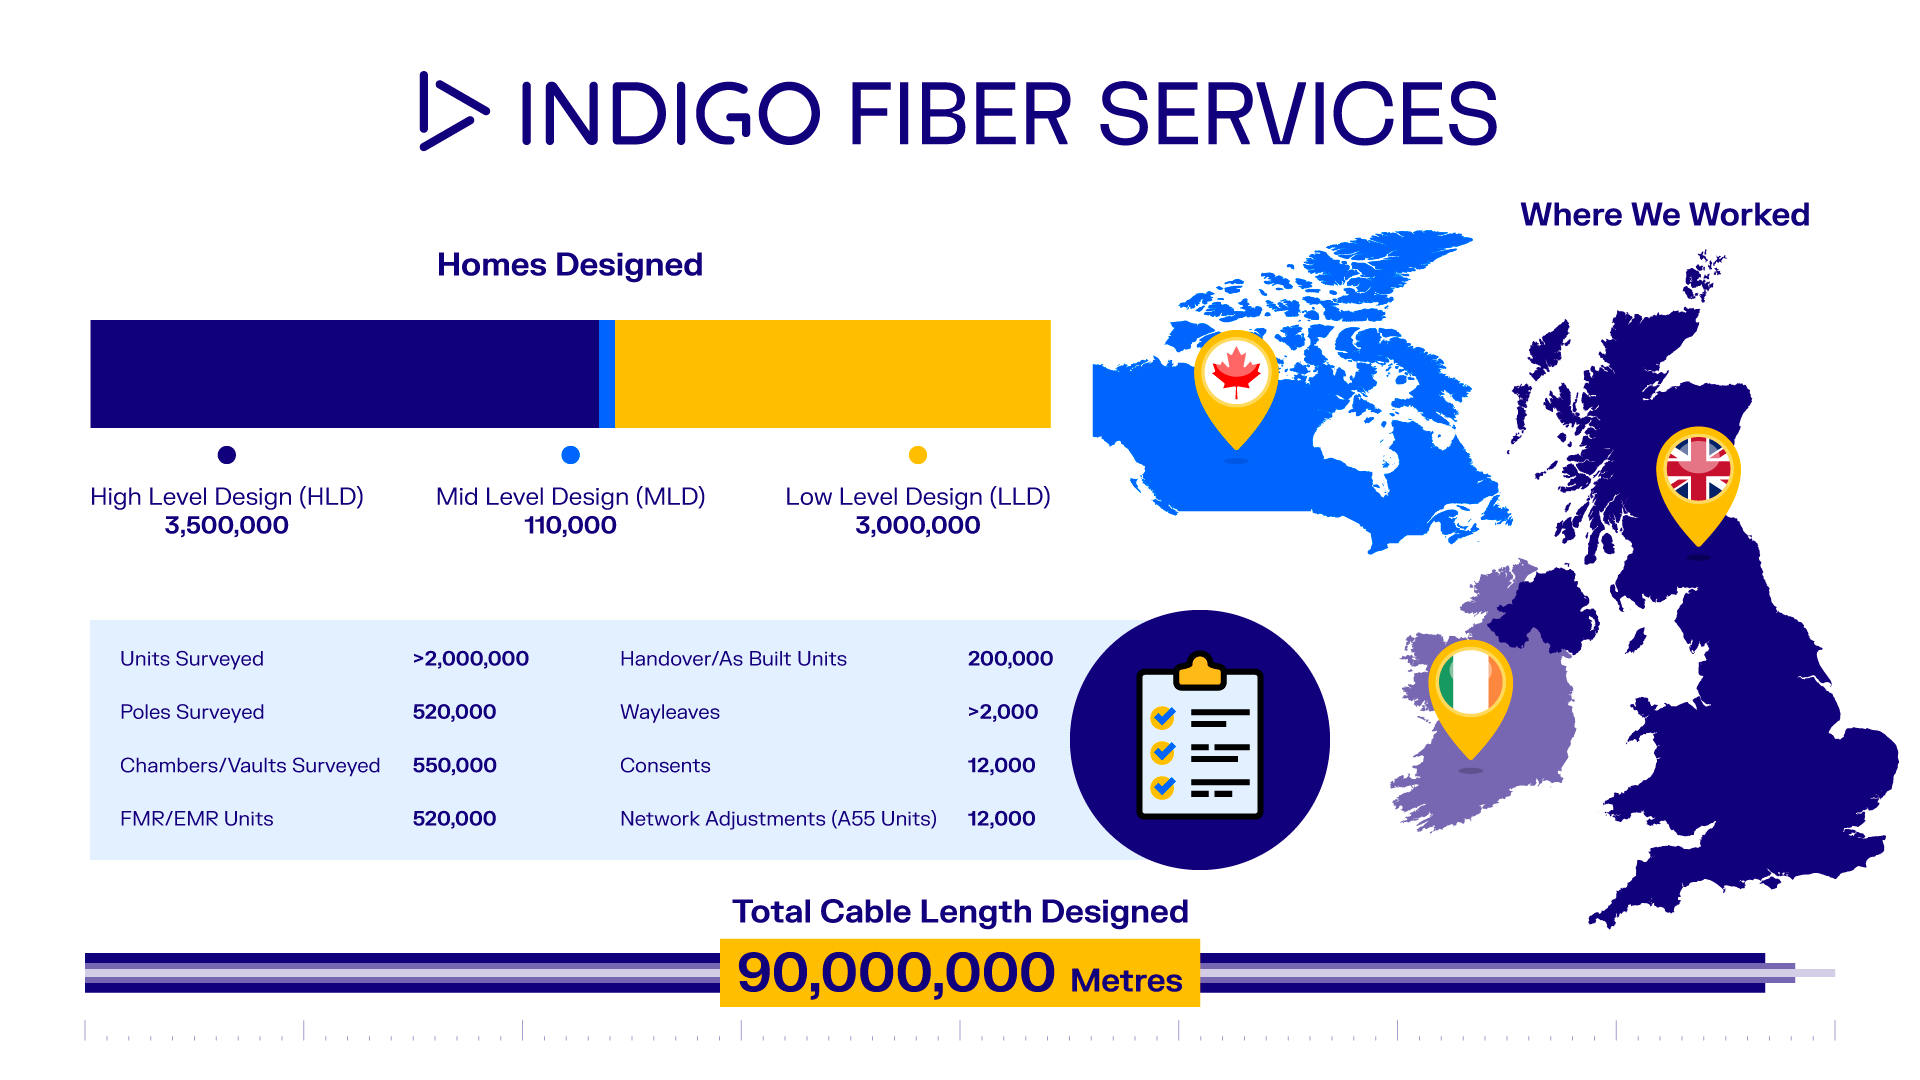 IND-76 Fibre Services Infographic US